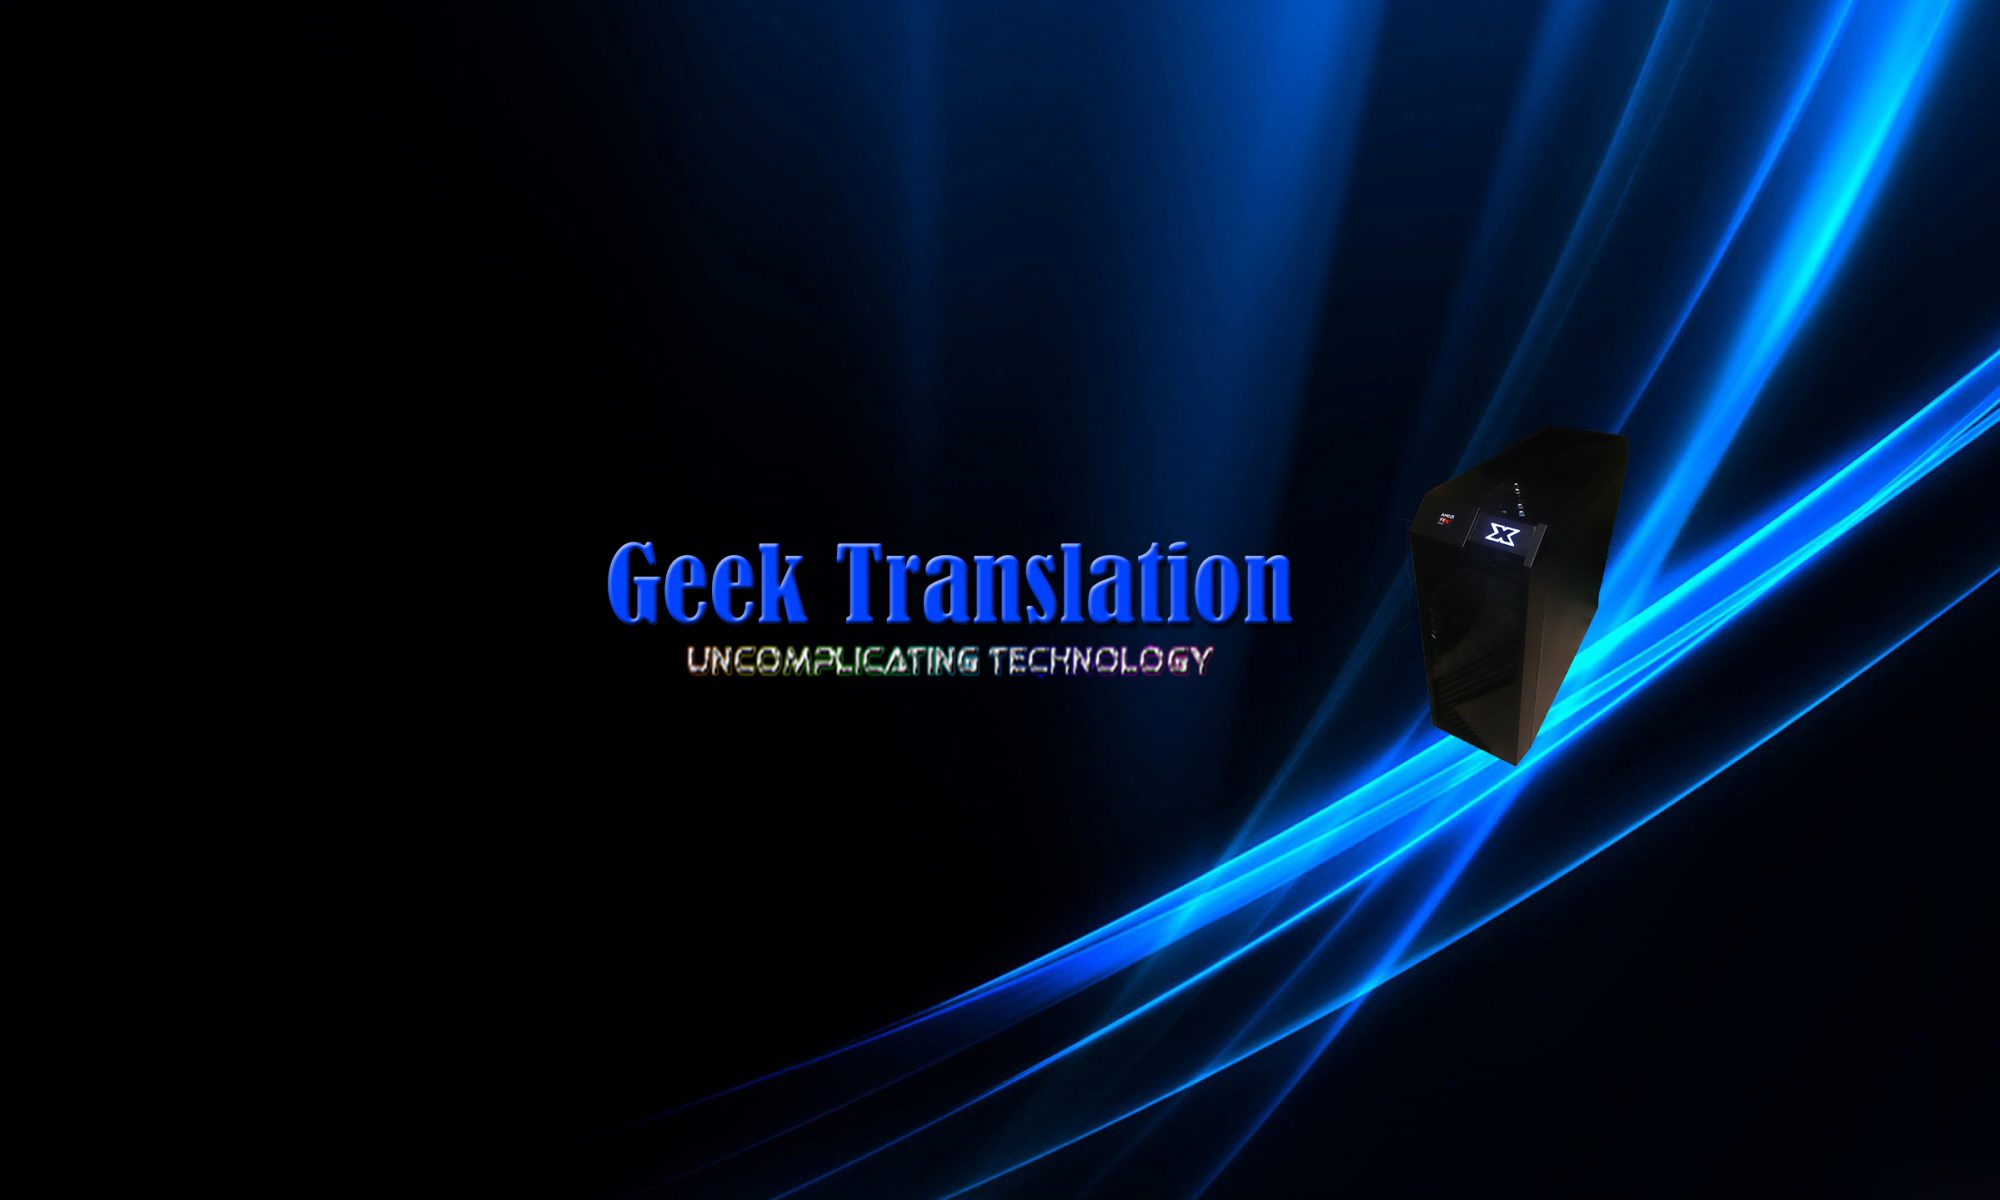 Geek Translation